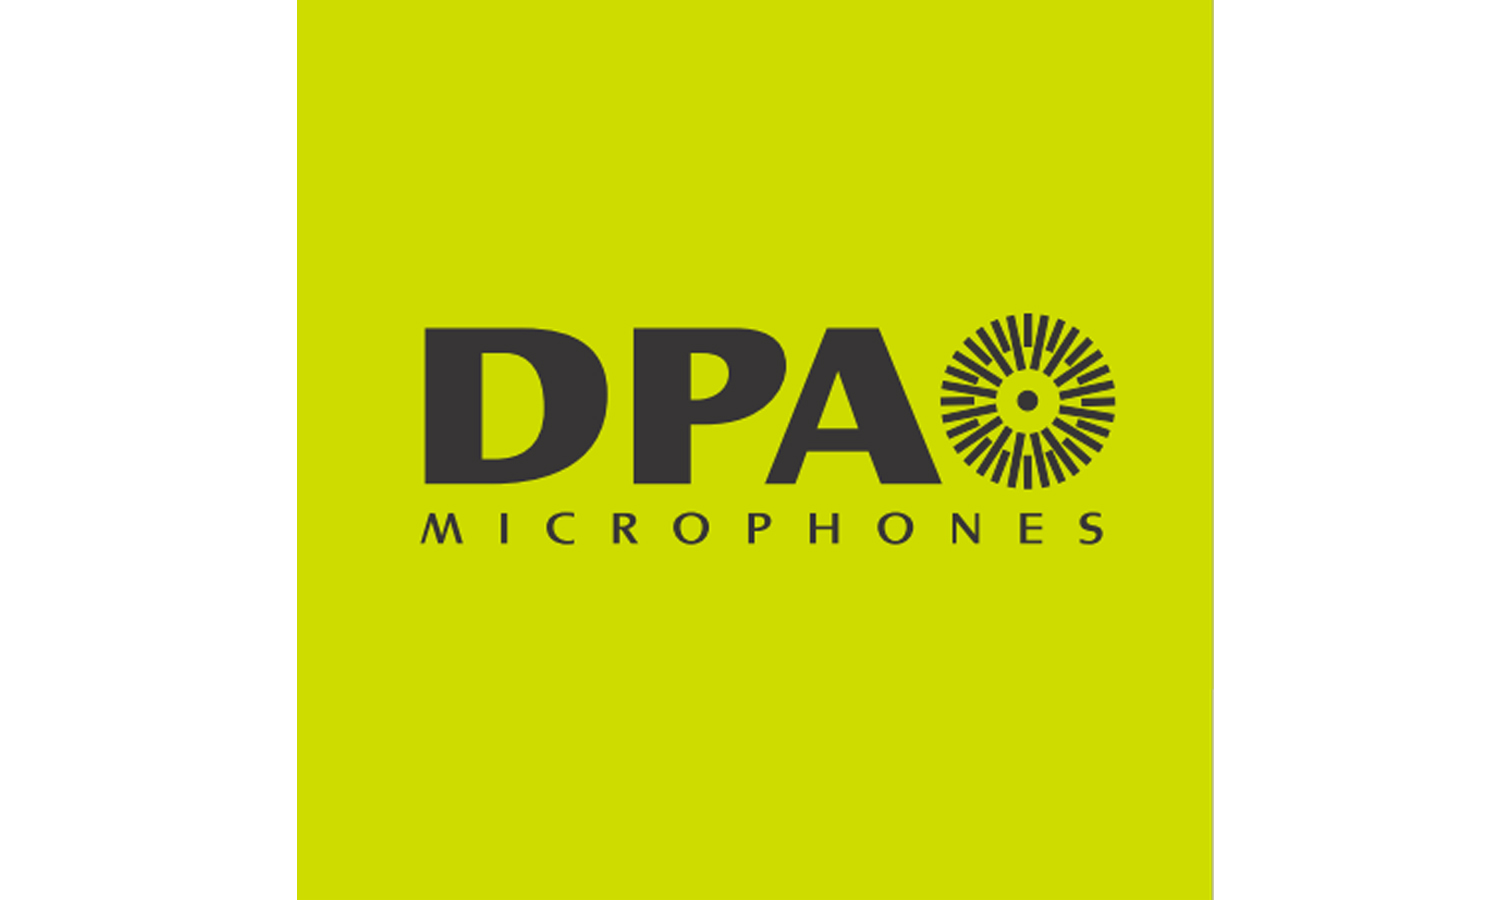 DPA MICROPHONES